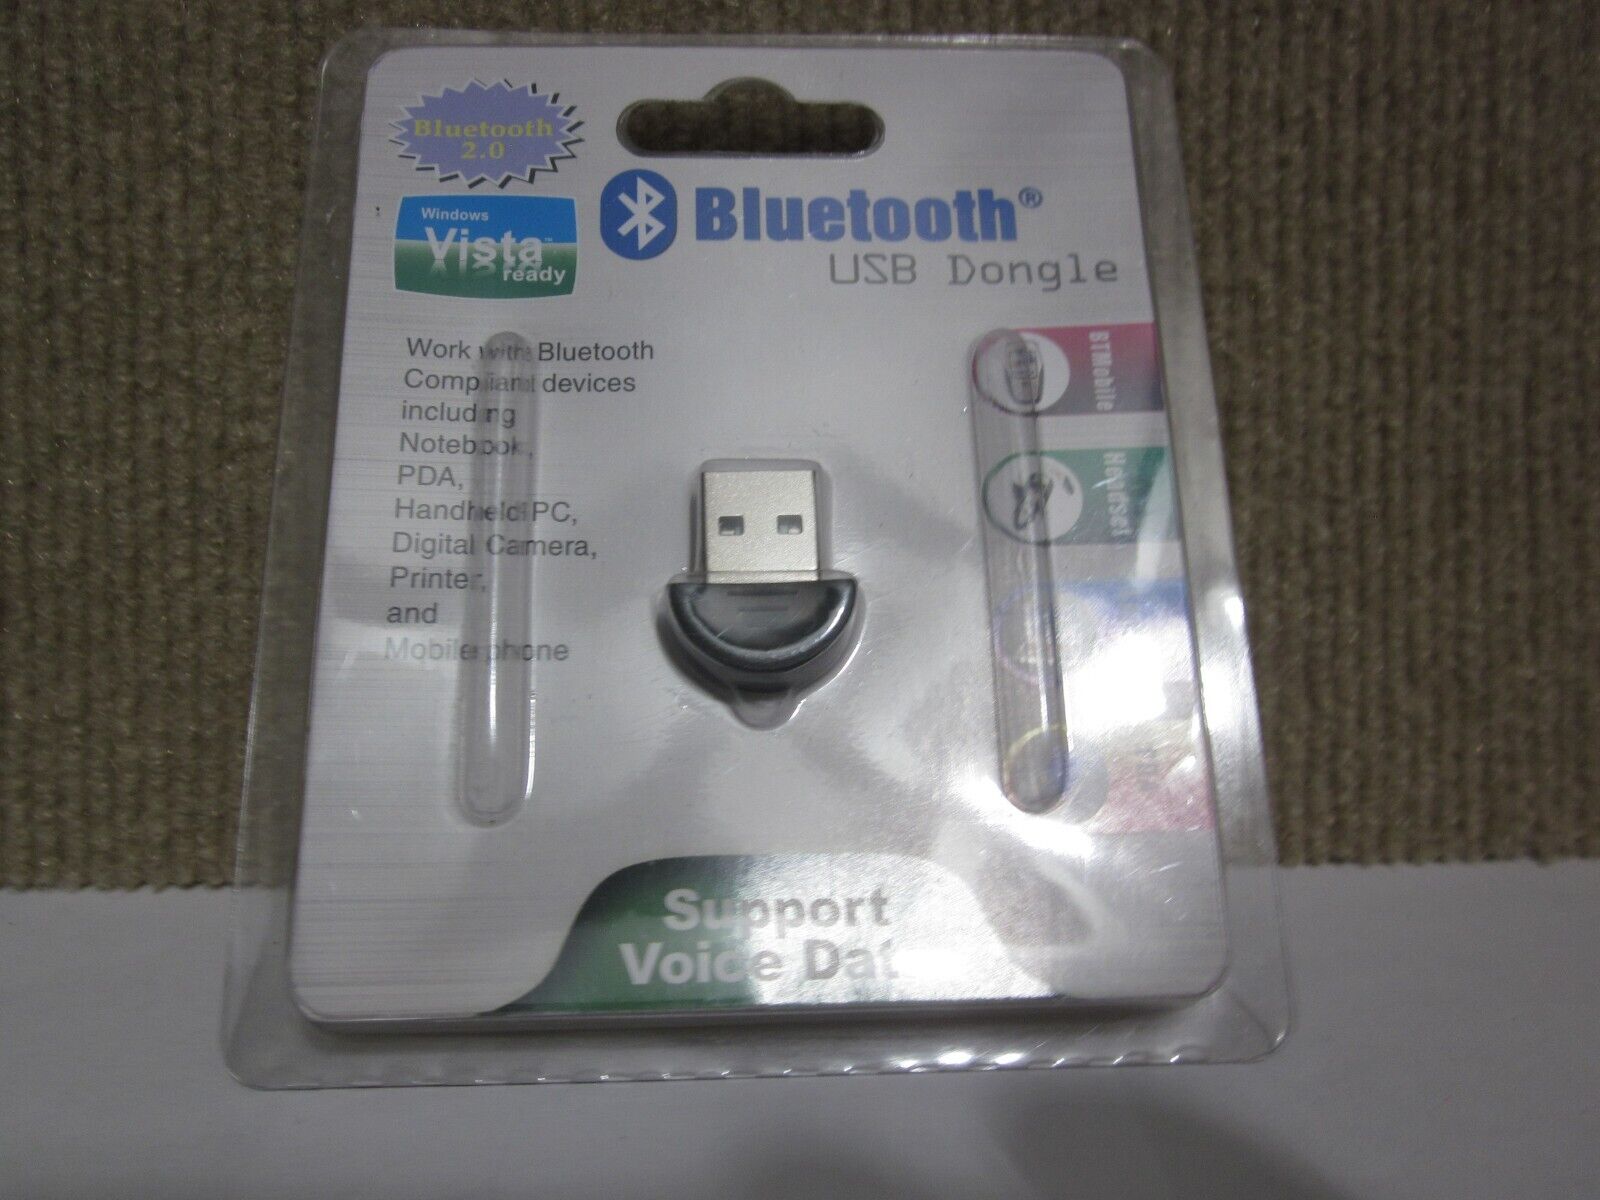 BLUETOOTH 2.0 USB DONGLE - NOTEBOOK - PDA - HANDHELD PC - DIGITAL CAMERA